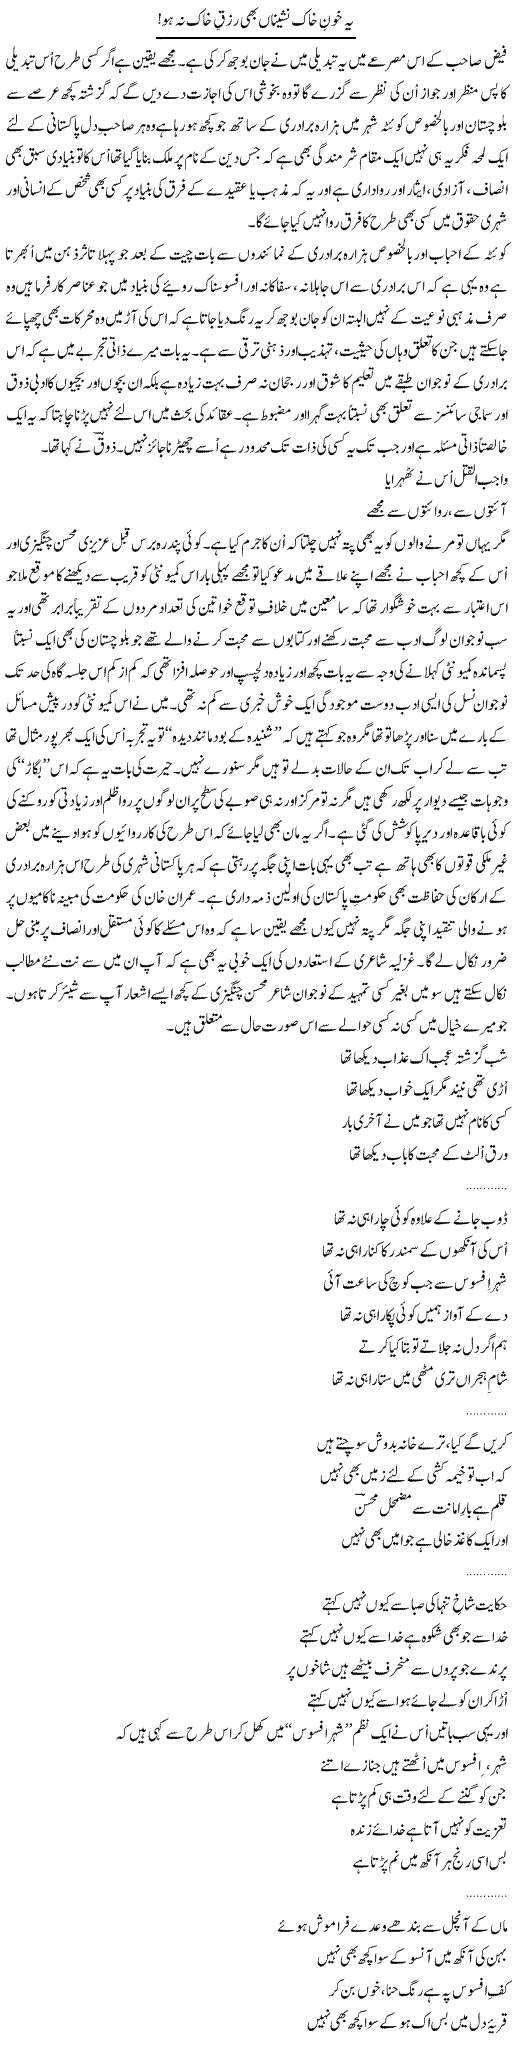 Ye Khoon Khaak Nashinan Bhi Rizq Khaak Na Ho | Amjad Islam Amjad | Daily Urdu Columns